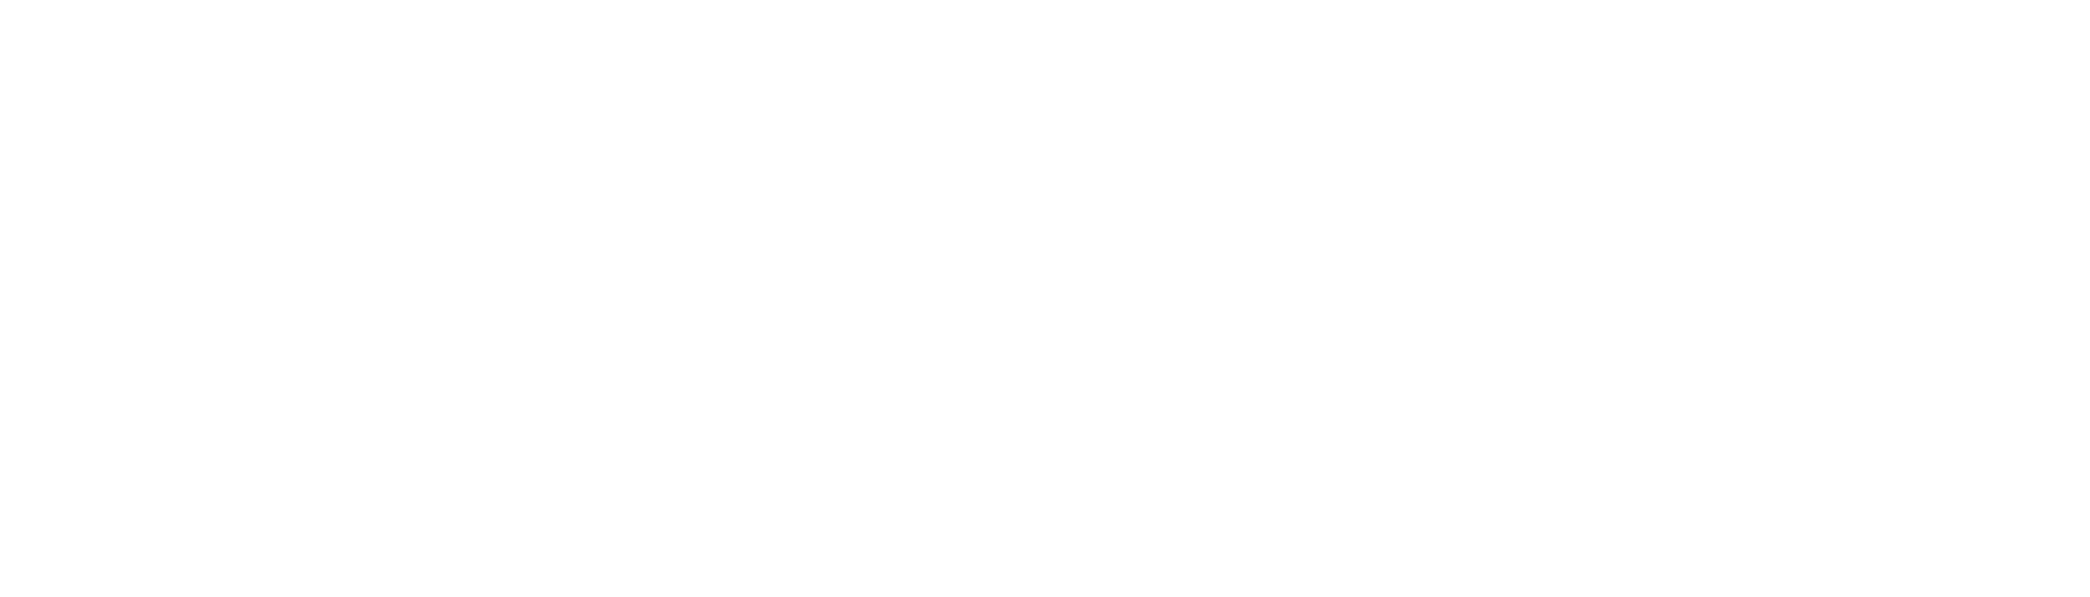 The nasdaq logo